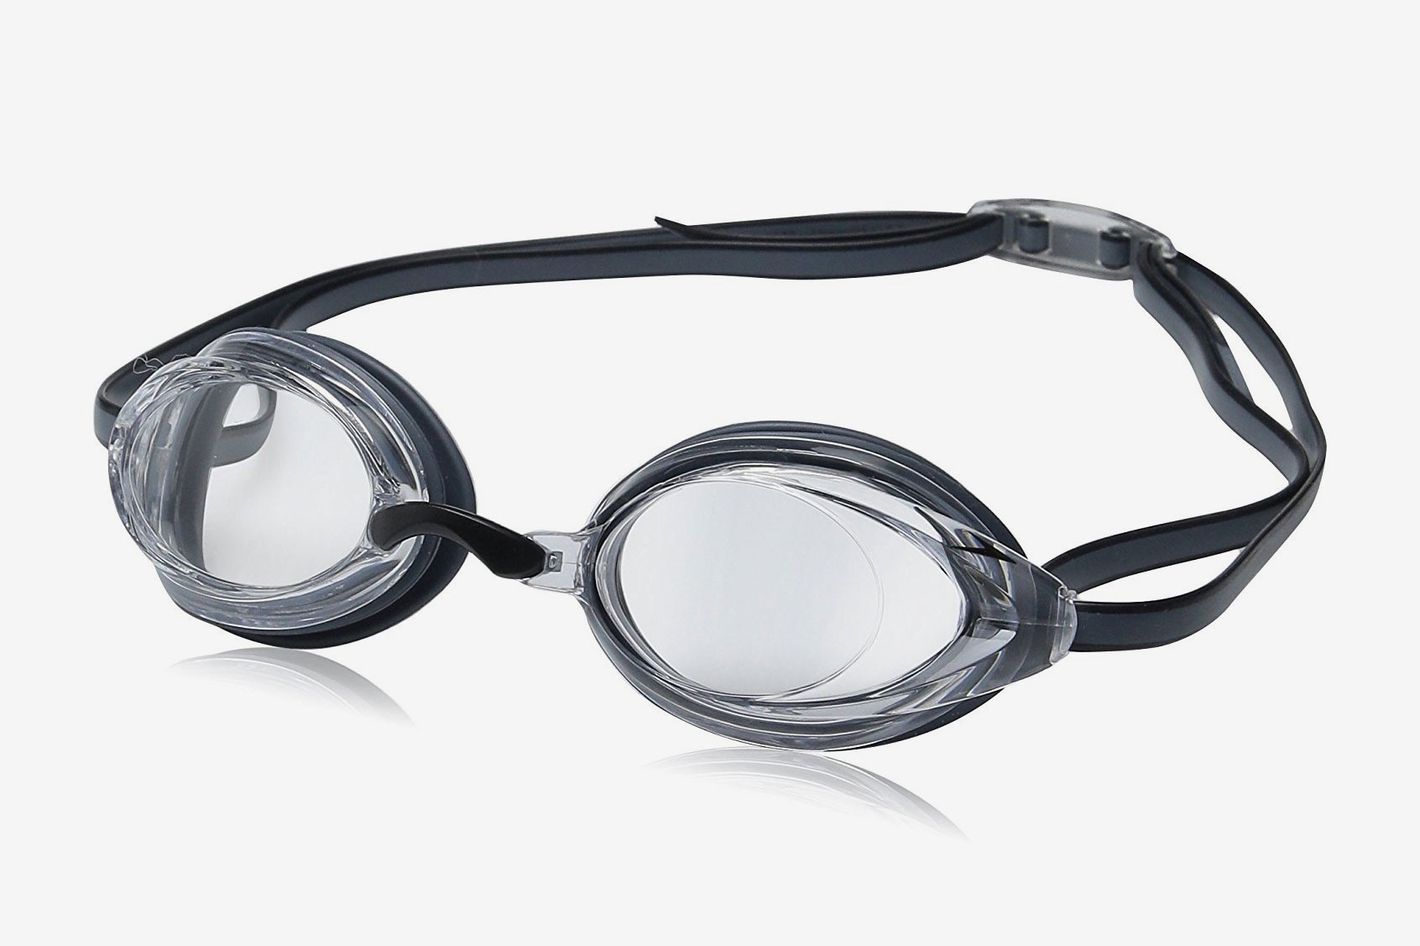 Coohole Swimming Goggles No Leaking Anti Fog Pool Sport Easy to Adjustable Waterproof Comfortable Swim Glasses Flat Light for Adult Men Women 